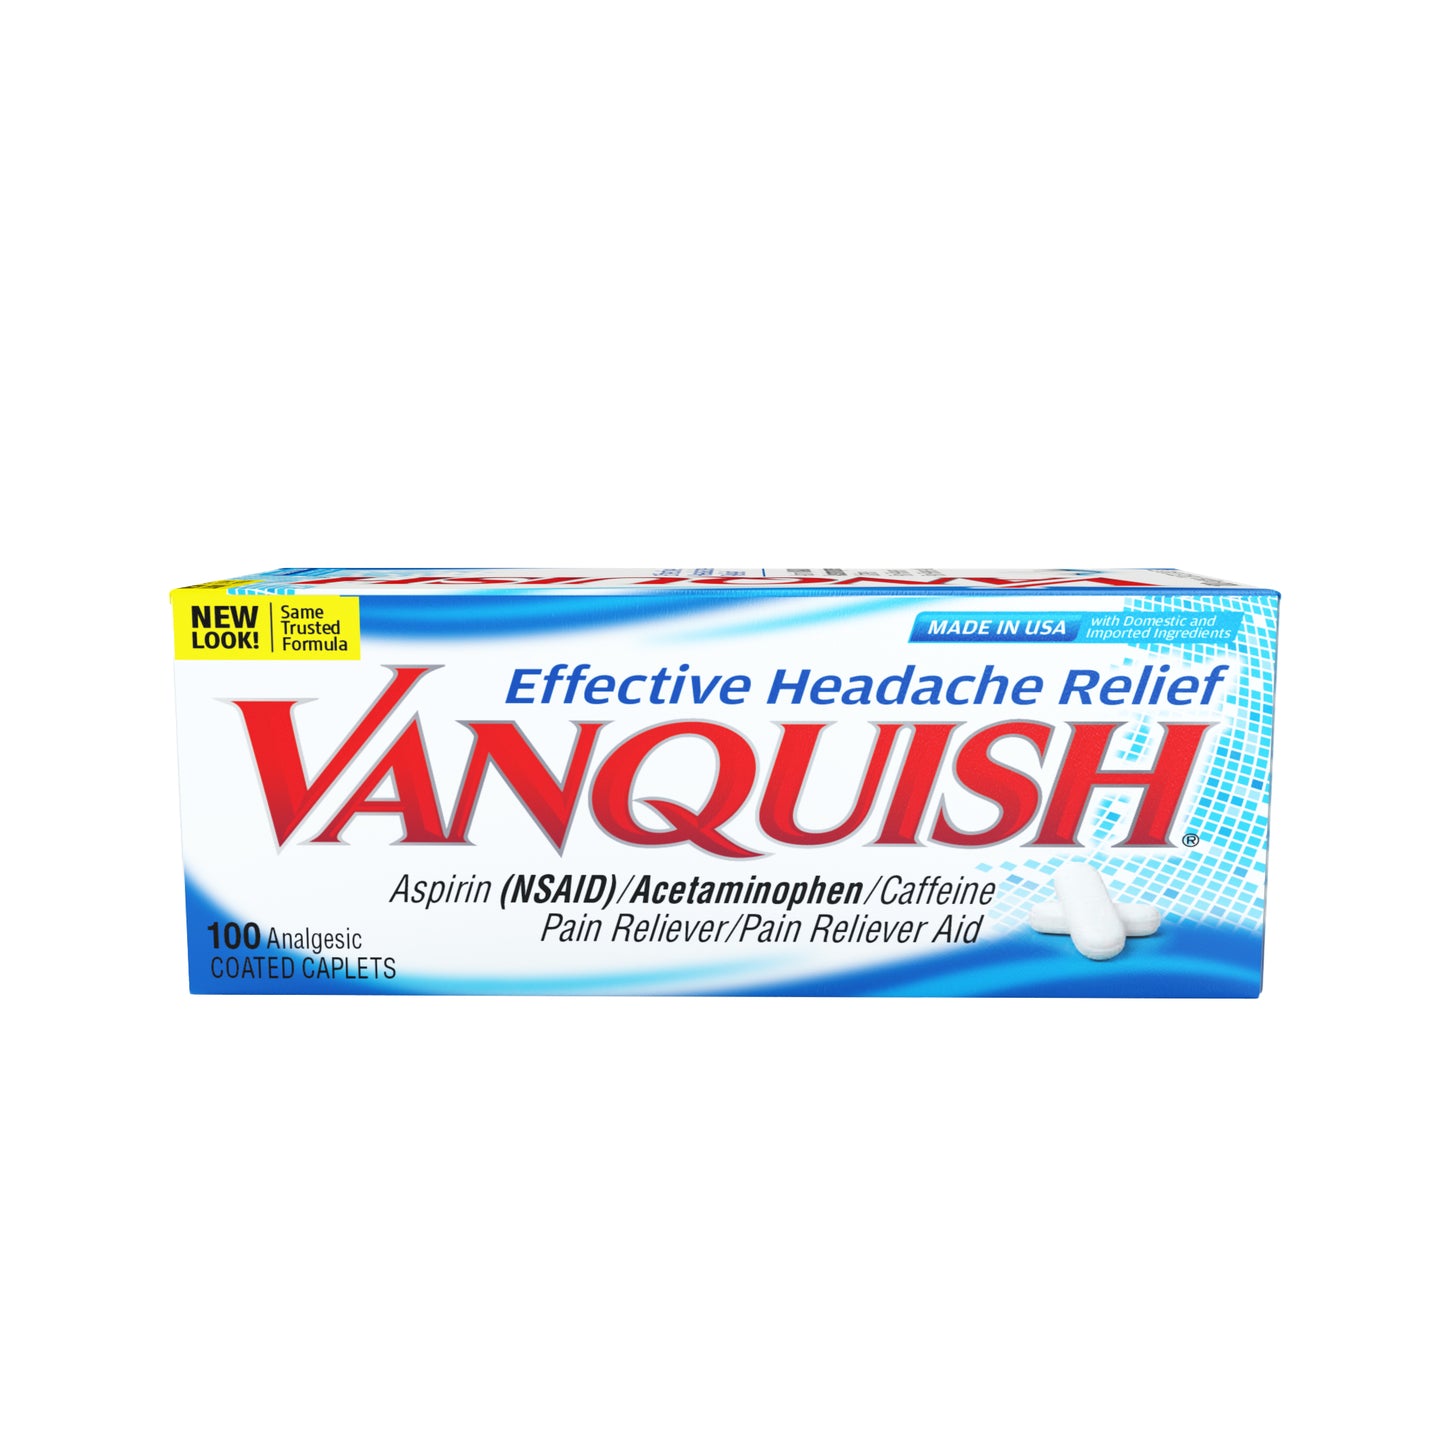 VANQUISH® Pain Reliever Aid